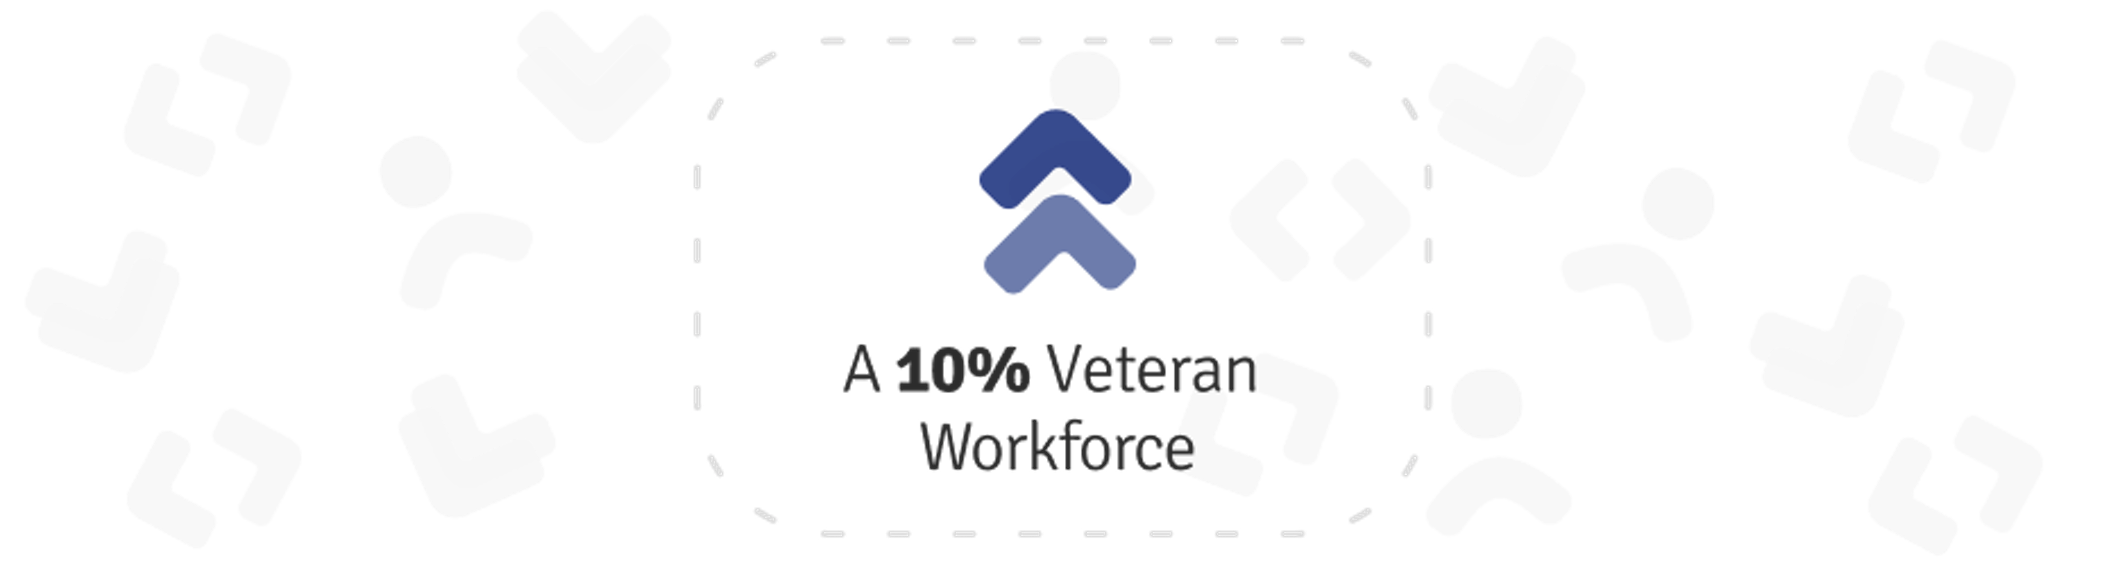 A 10% Veteran Workforce